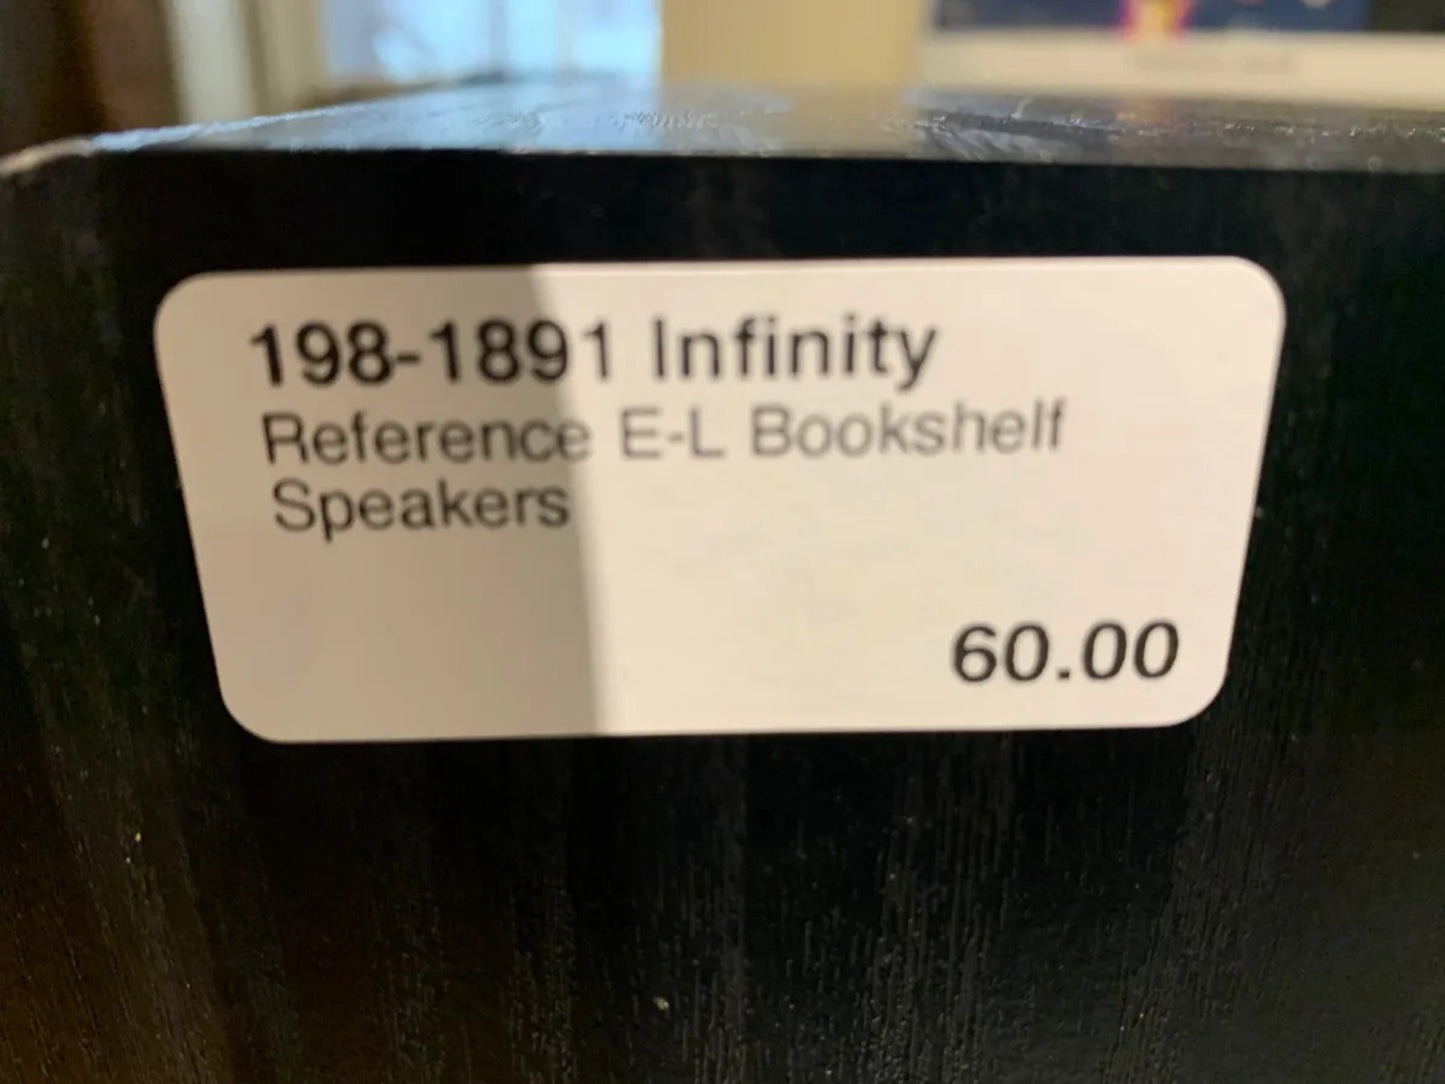 Infinity Reference E-L Bookshelf Speakers